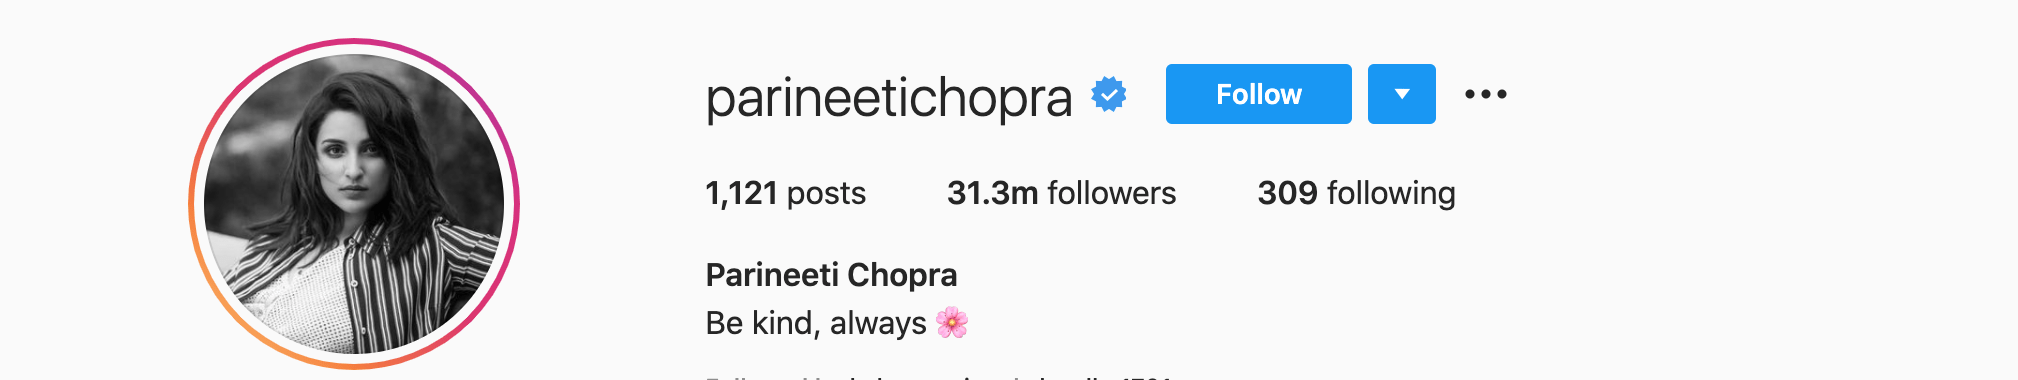 Top Instagram Influencers - PARINEETI CHOPRA